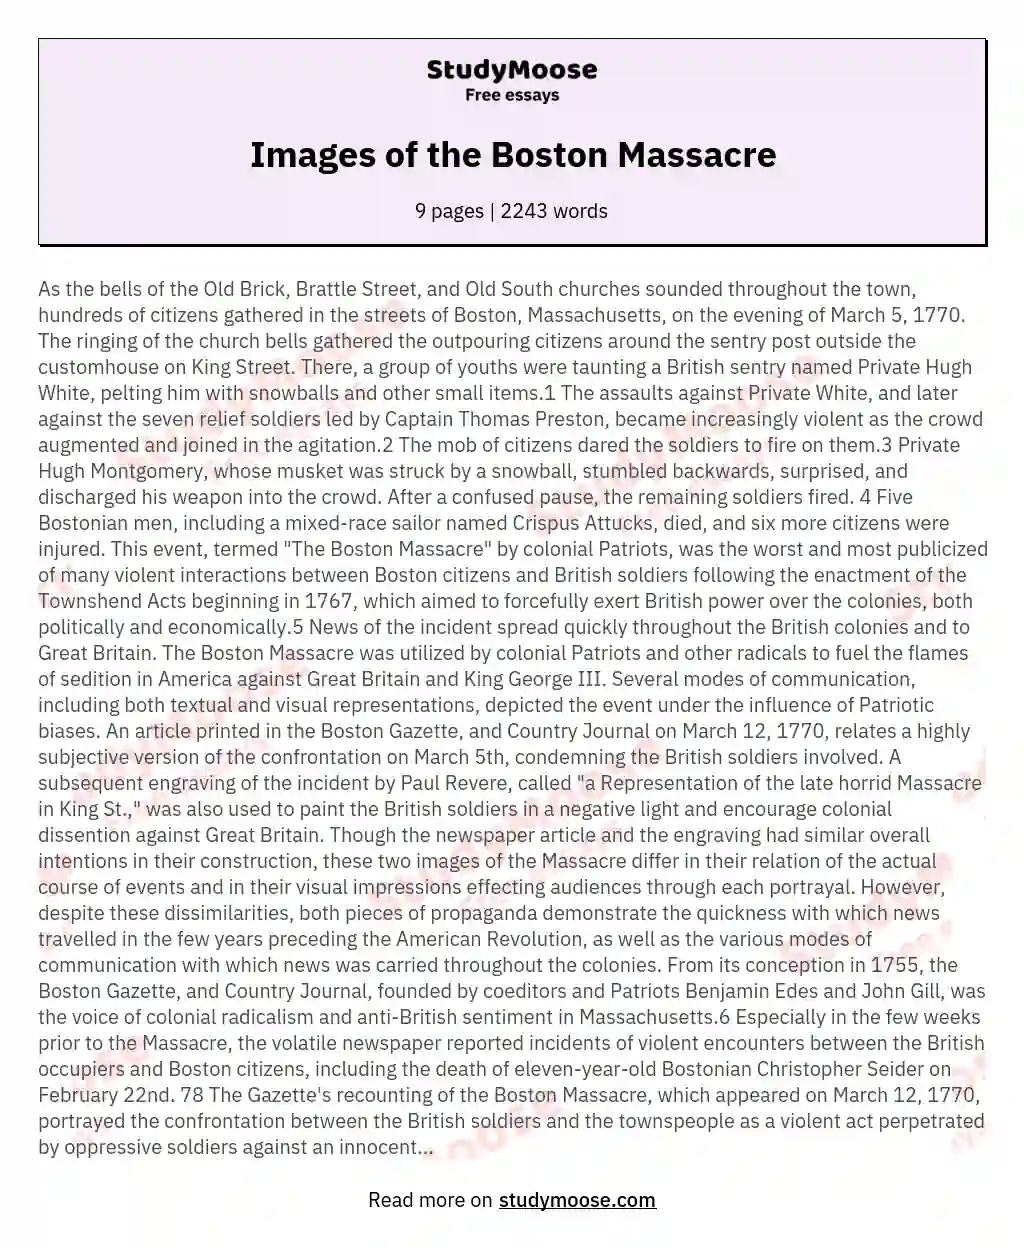 Images of the Boston Massacre essay